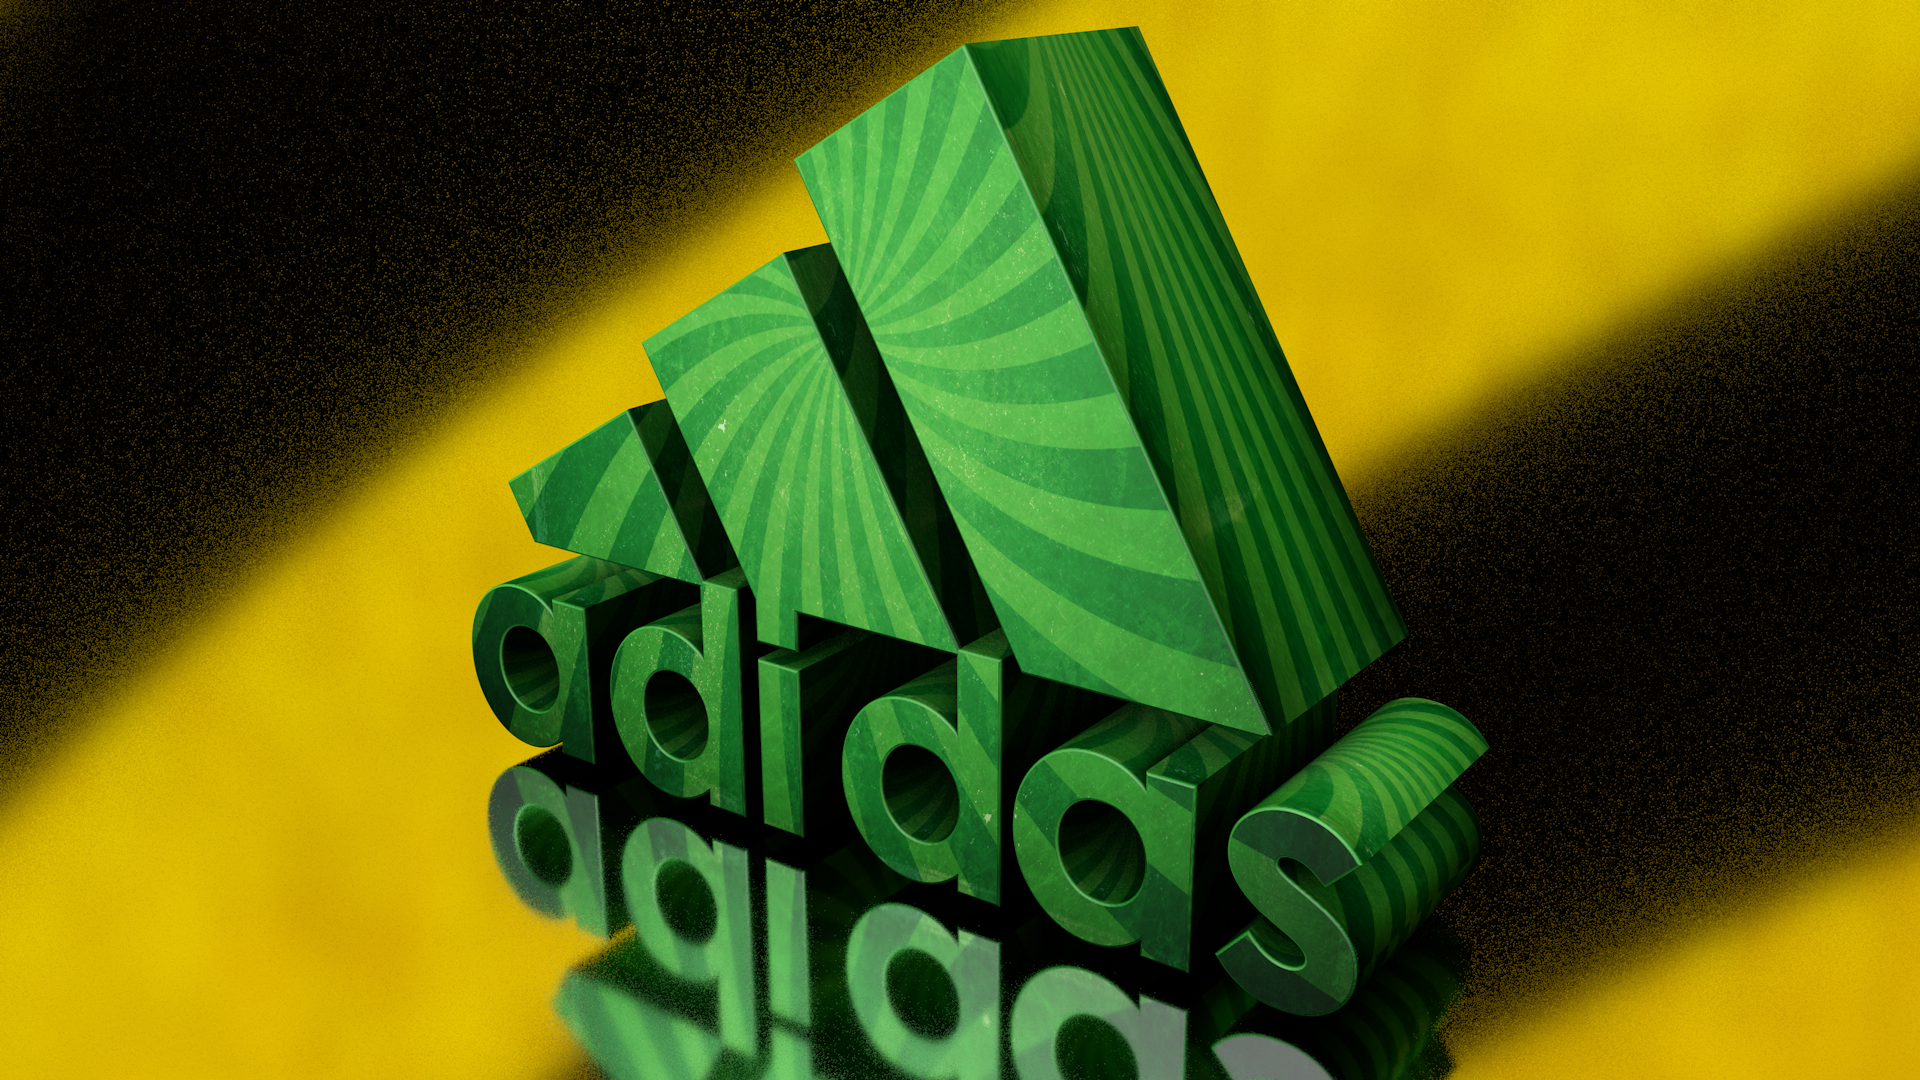 Adidas Art Wallpapers